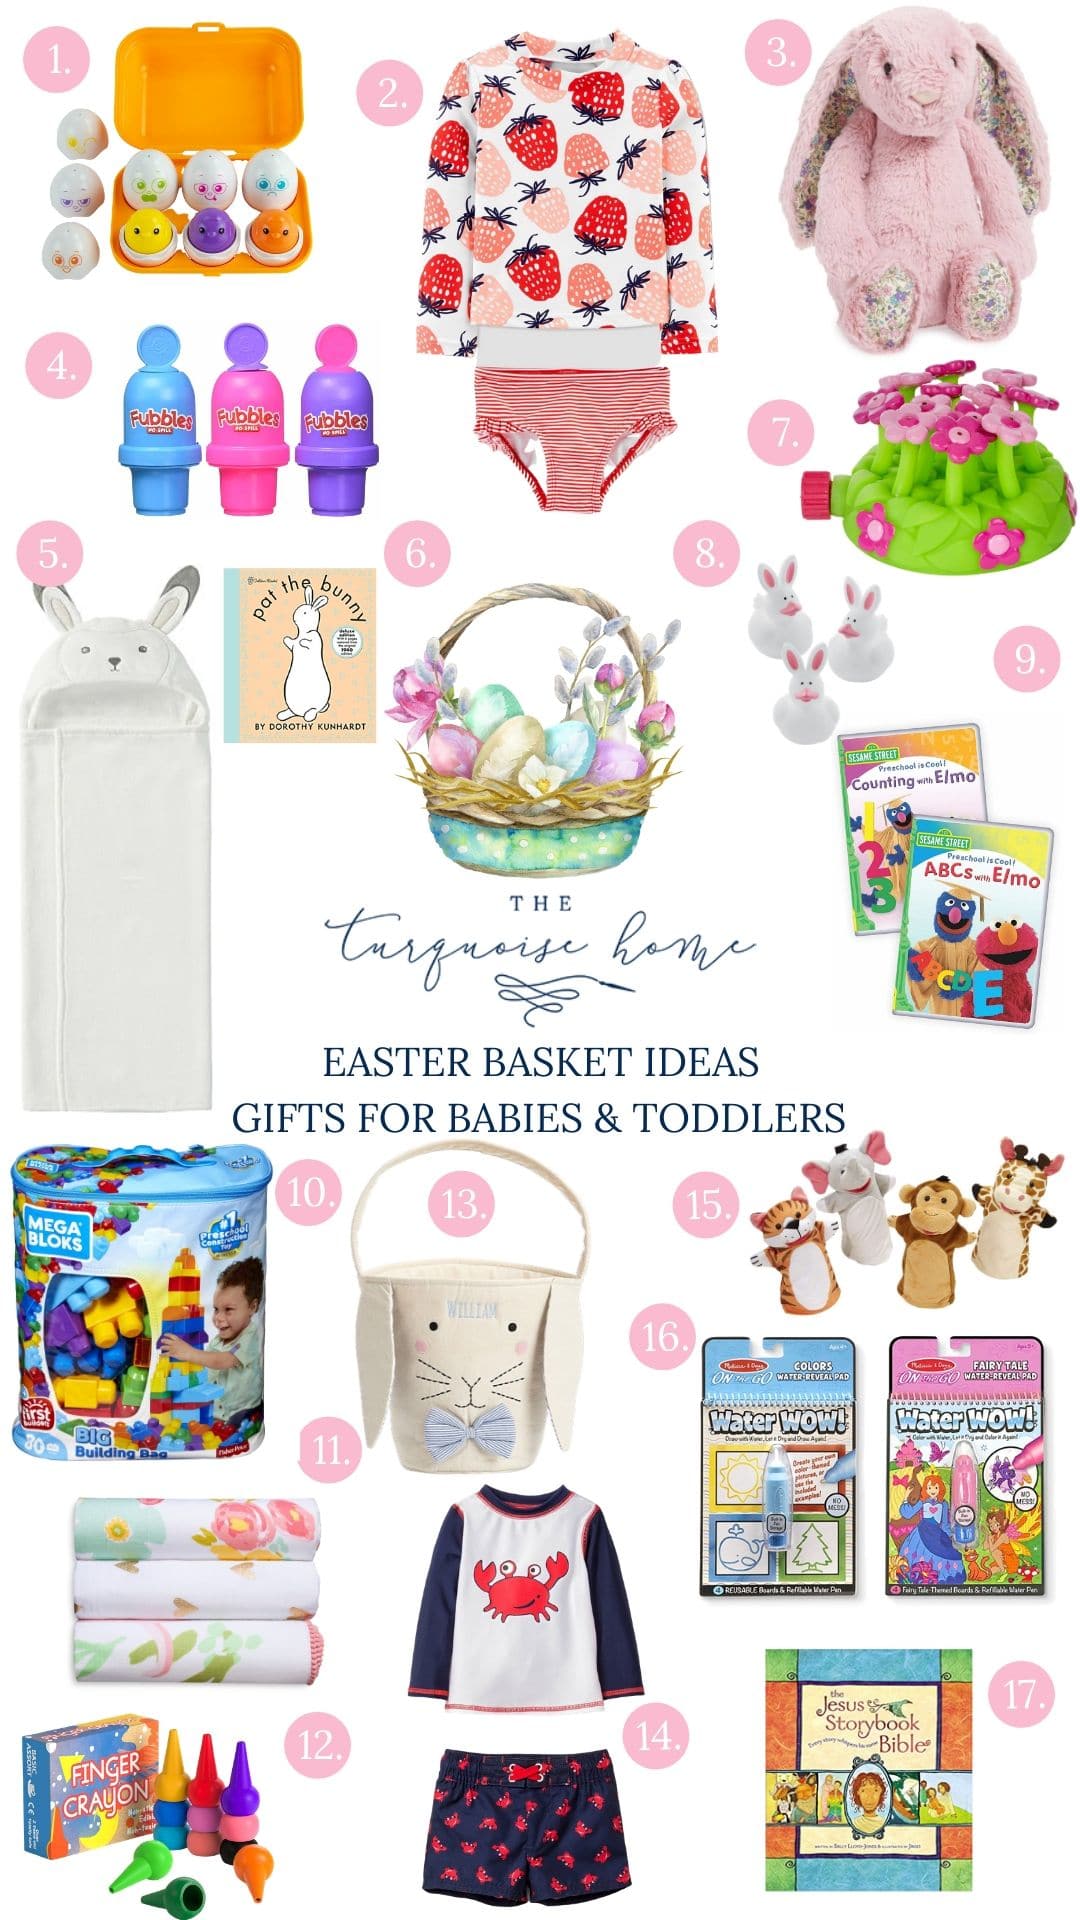 The Best Easter Basket Ideas for Kids